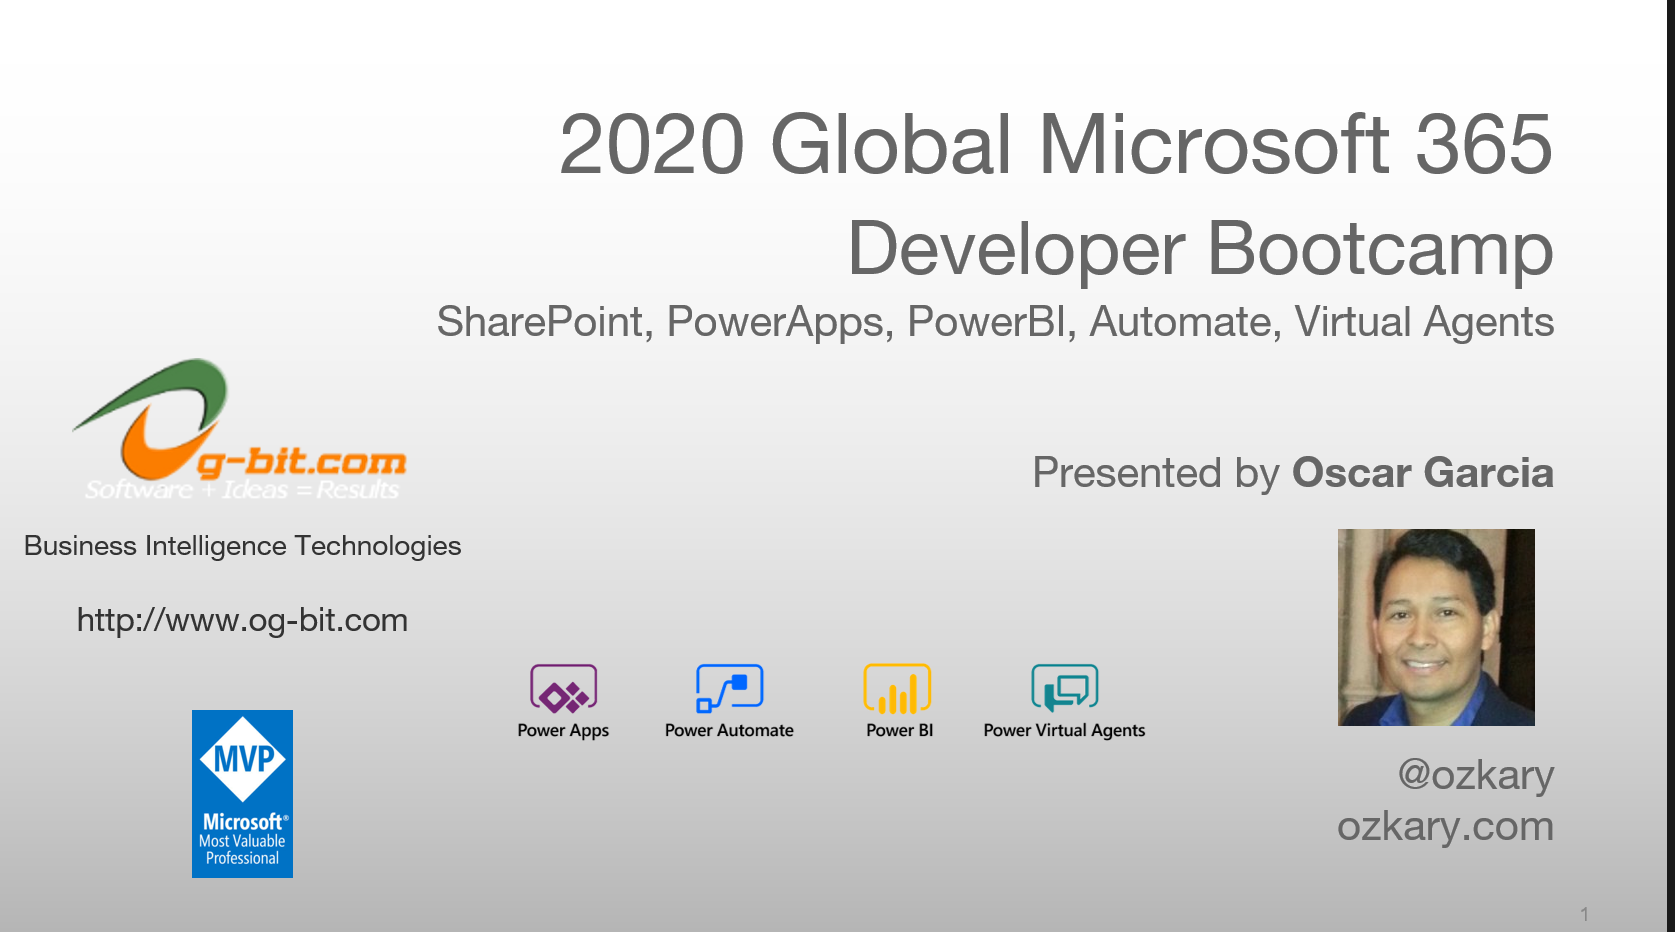 Microsoft 365 Platform by Oscar Garcia @ozkary